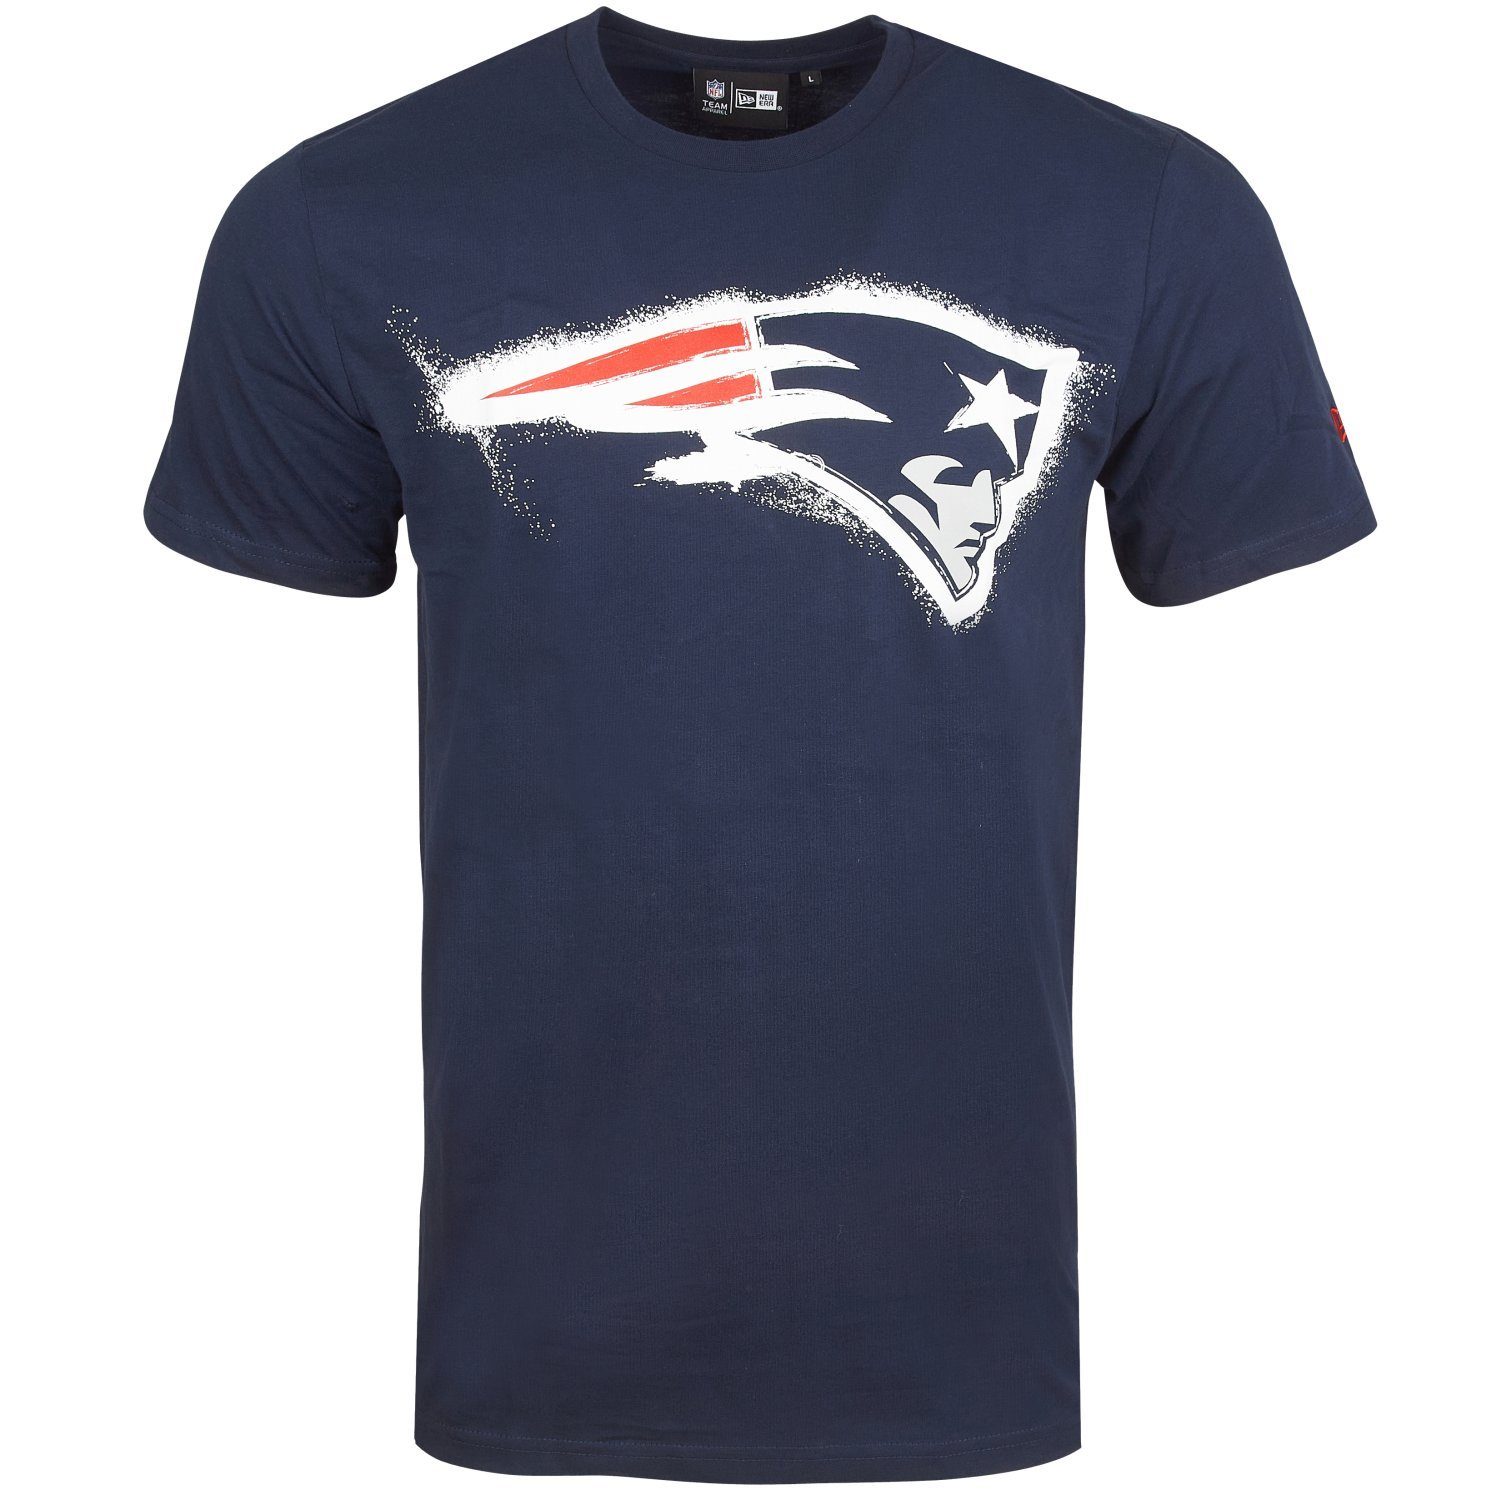 New Era Print-Shirt NFL SPRAY Bucs Chiefs Seahawks Patriots Packer New England Patriots